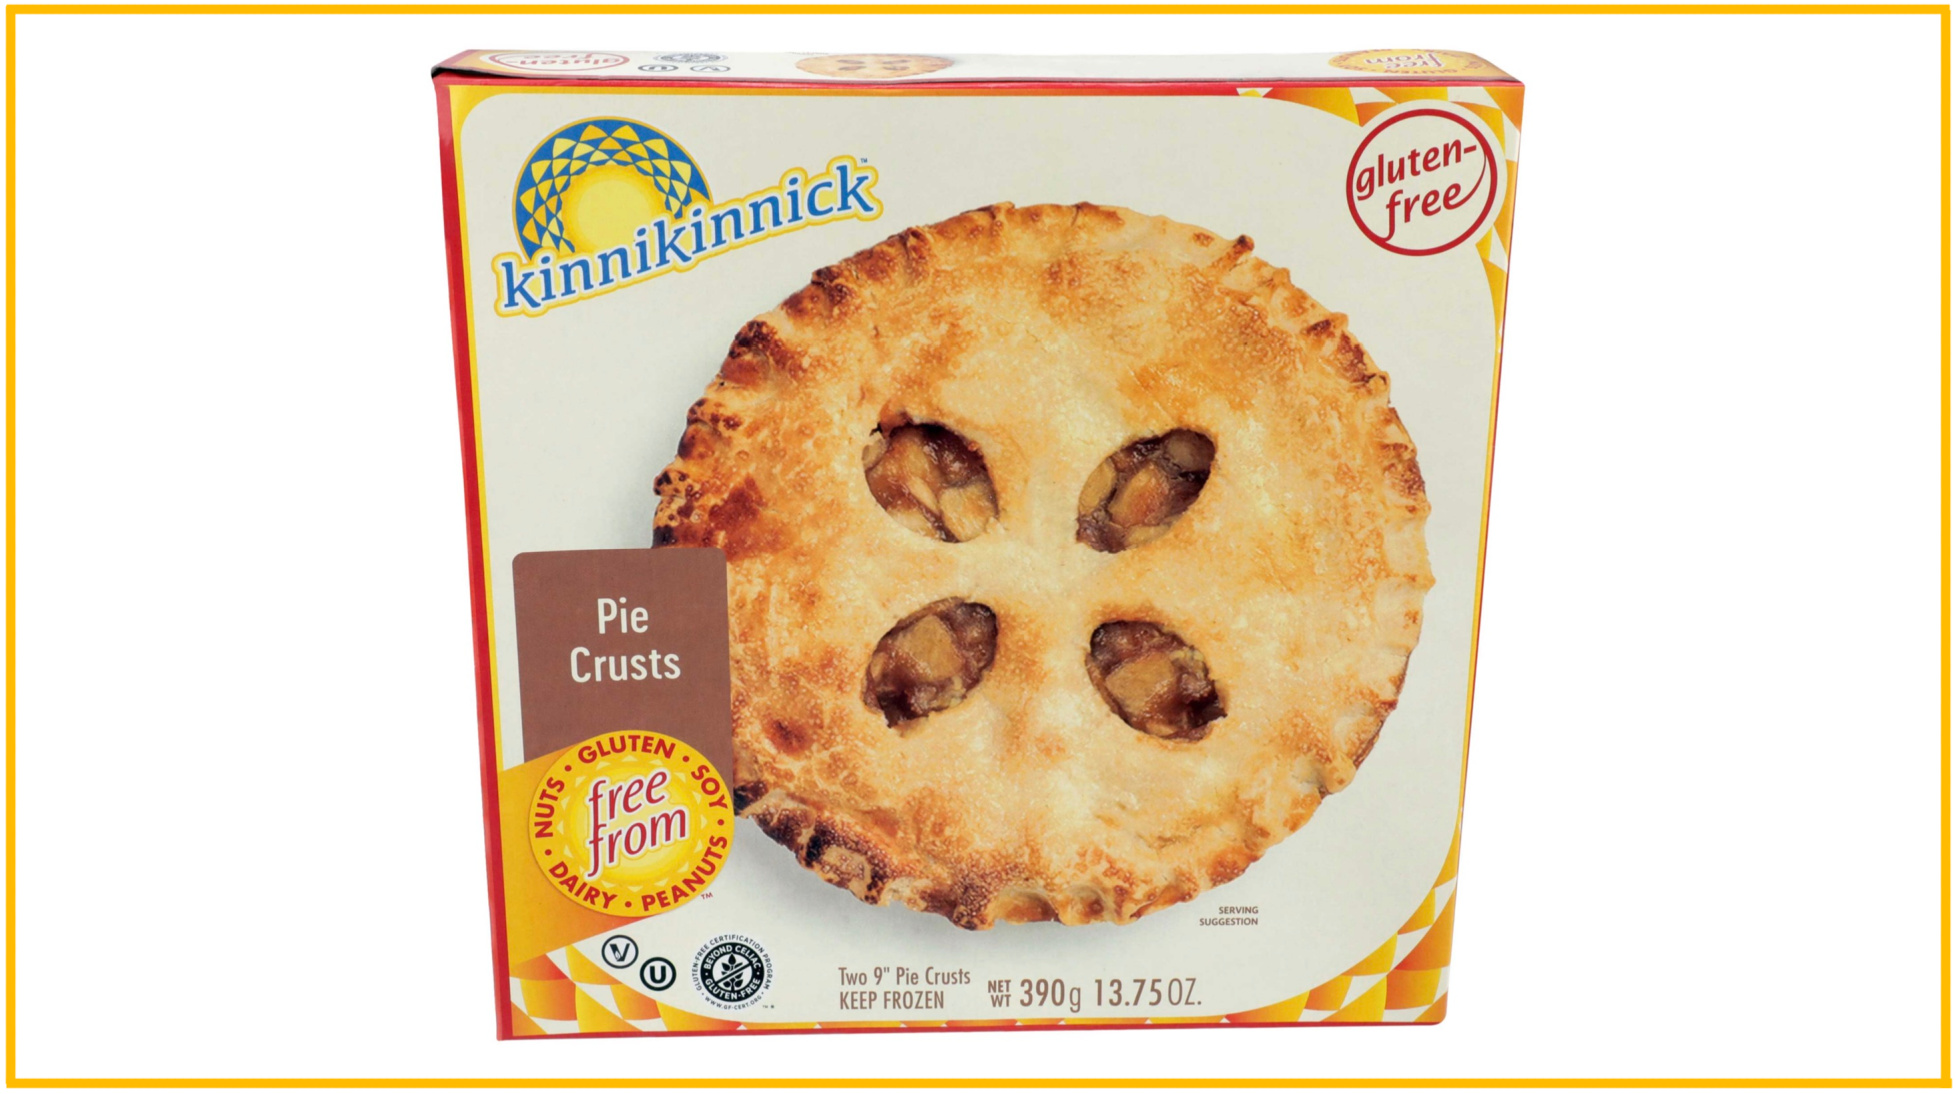 Kinnikinnick Pie Crusts Gluten Free